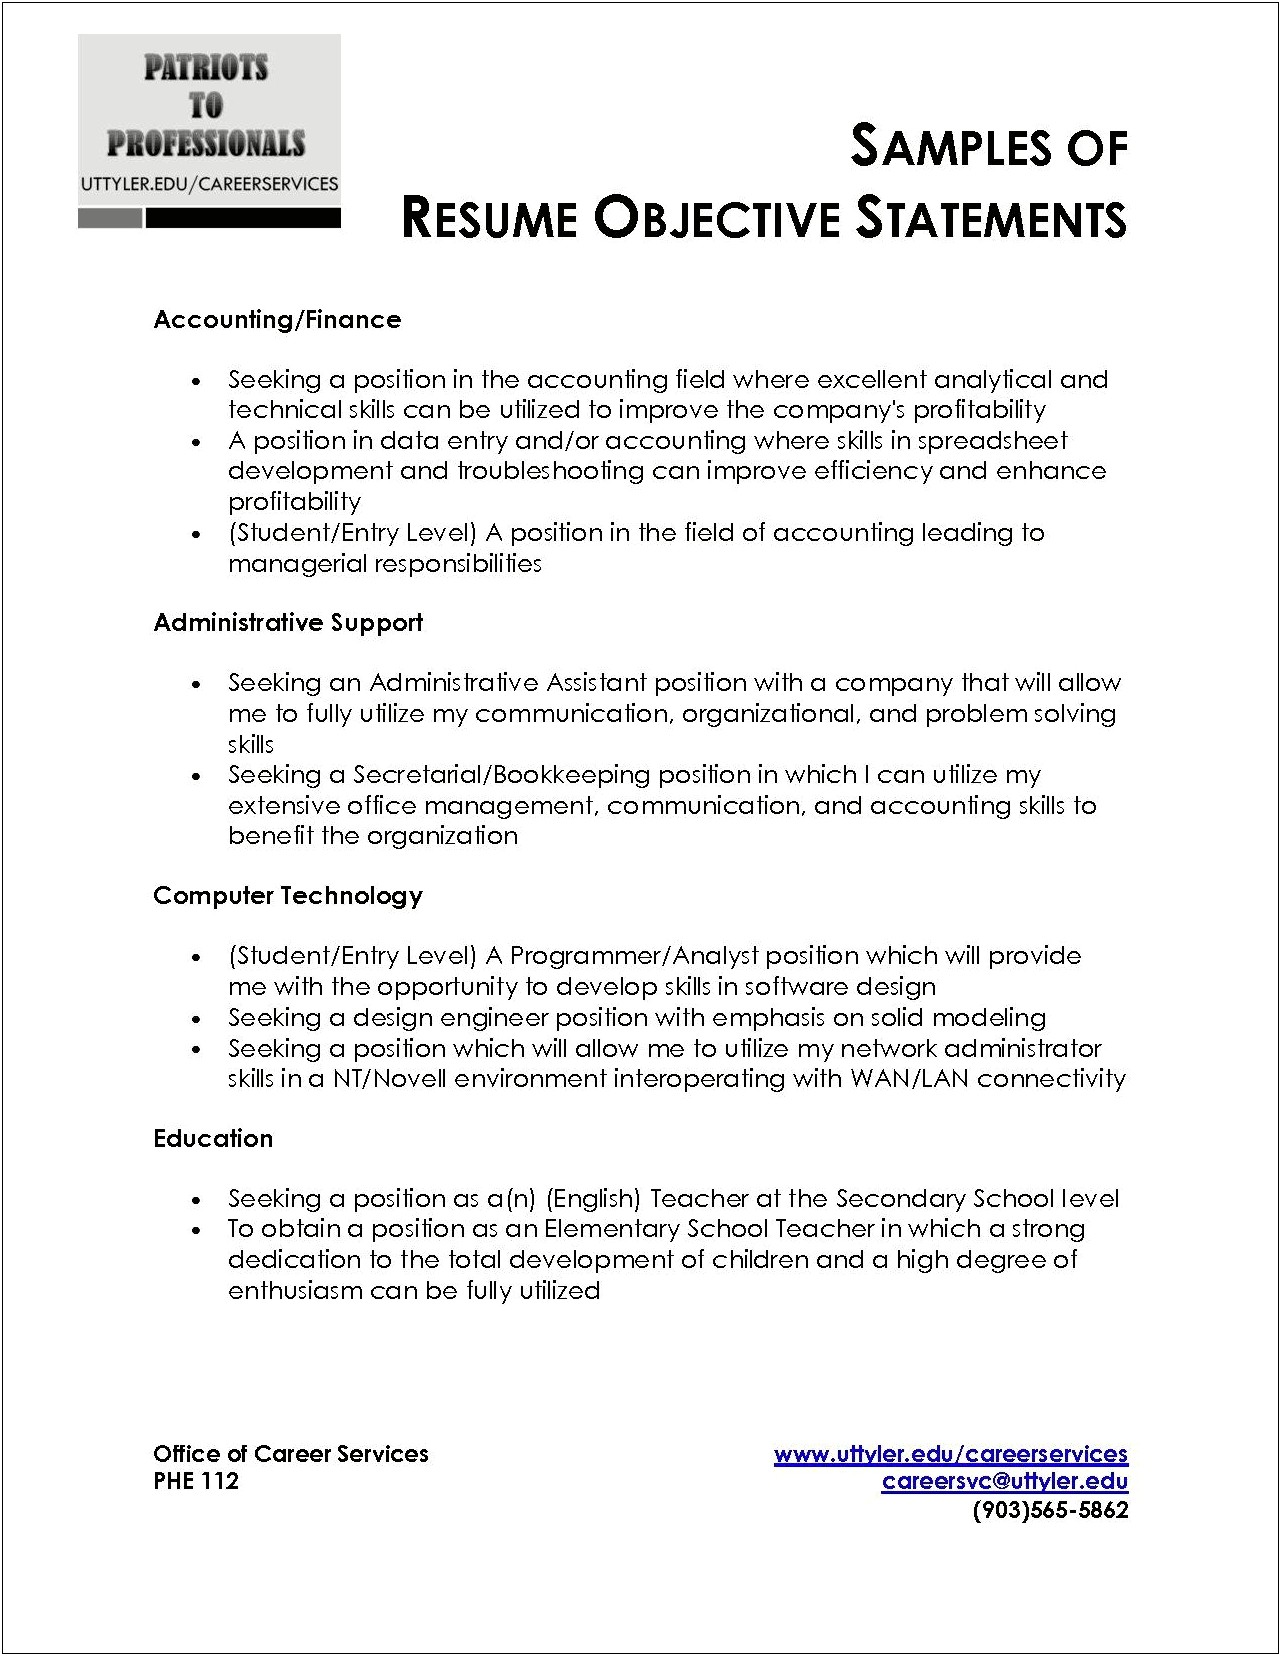 Resume Customer Service Objective Statements